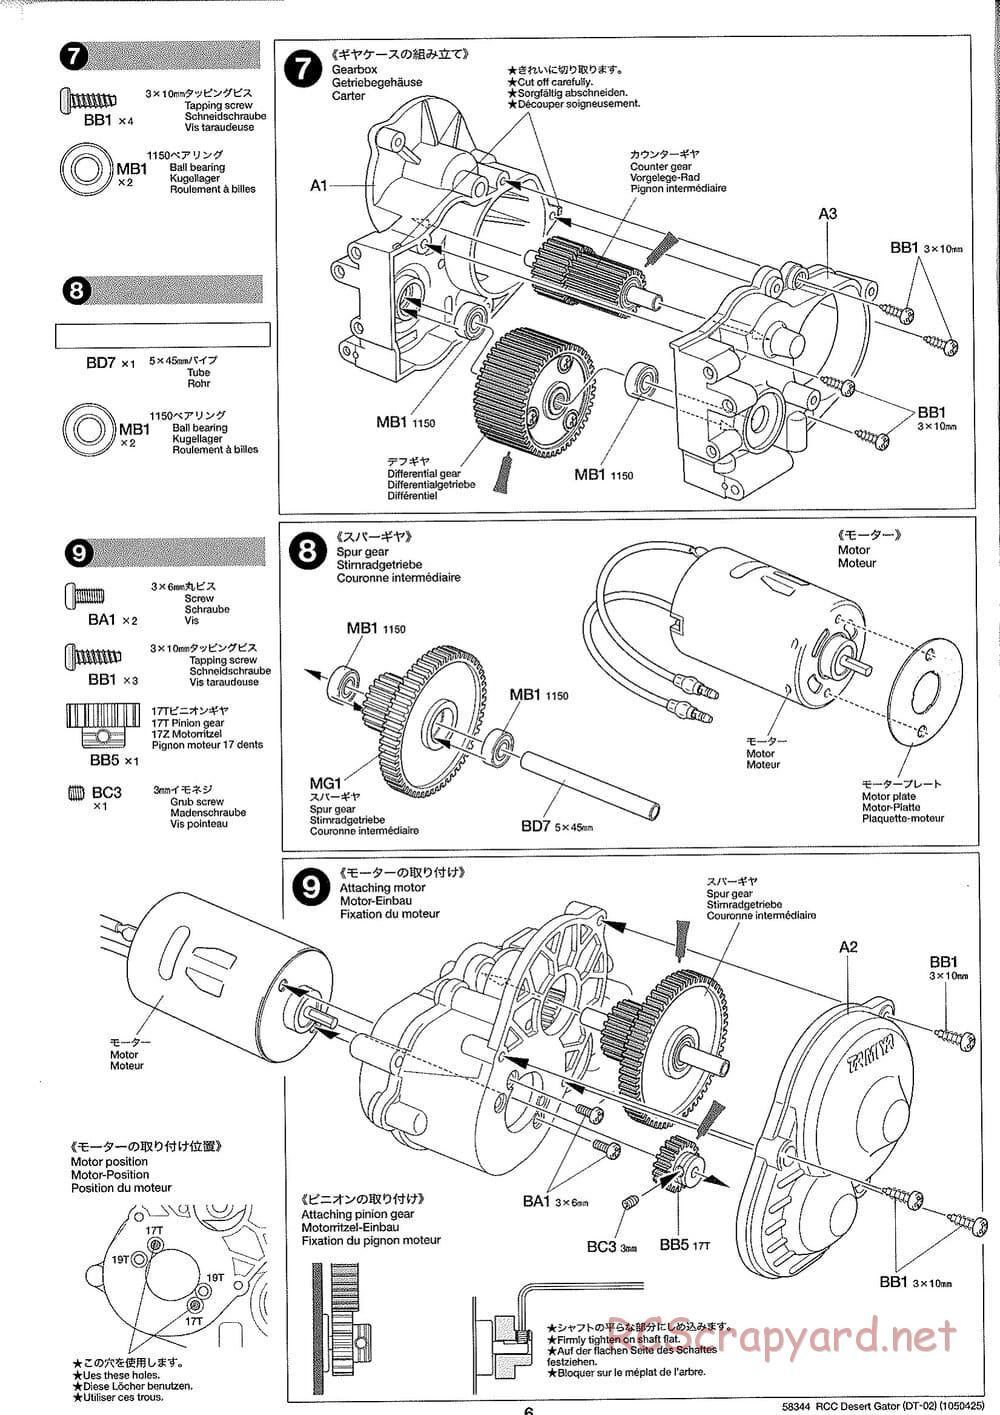 Tamiya - Desert Gator Chassis - Manual - Page 6